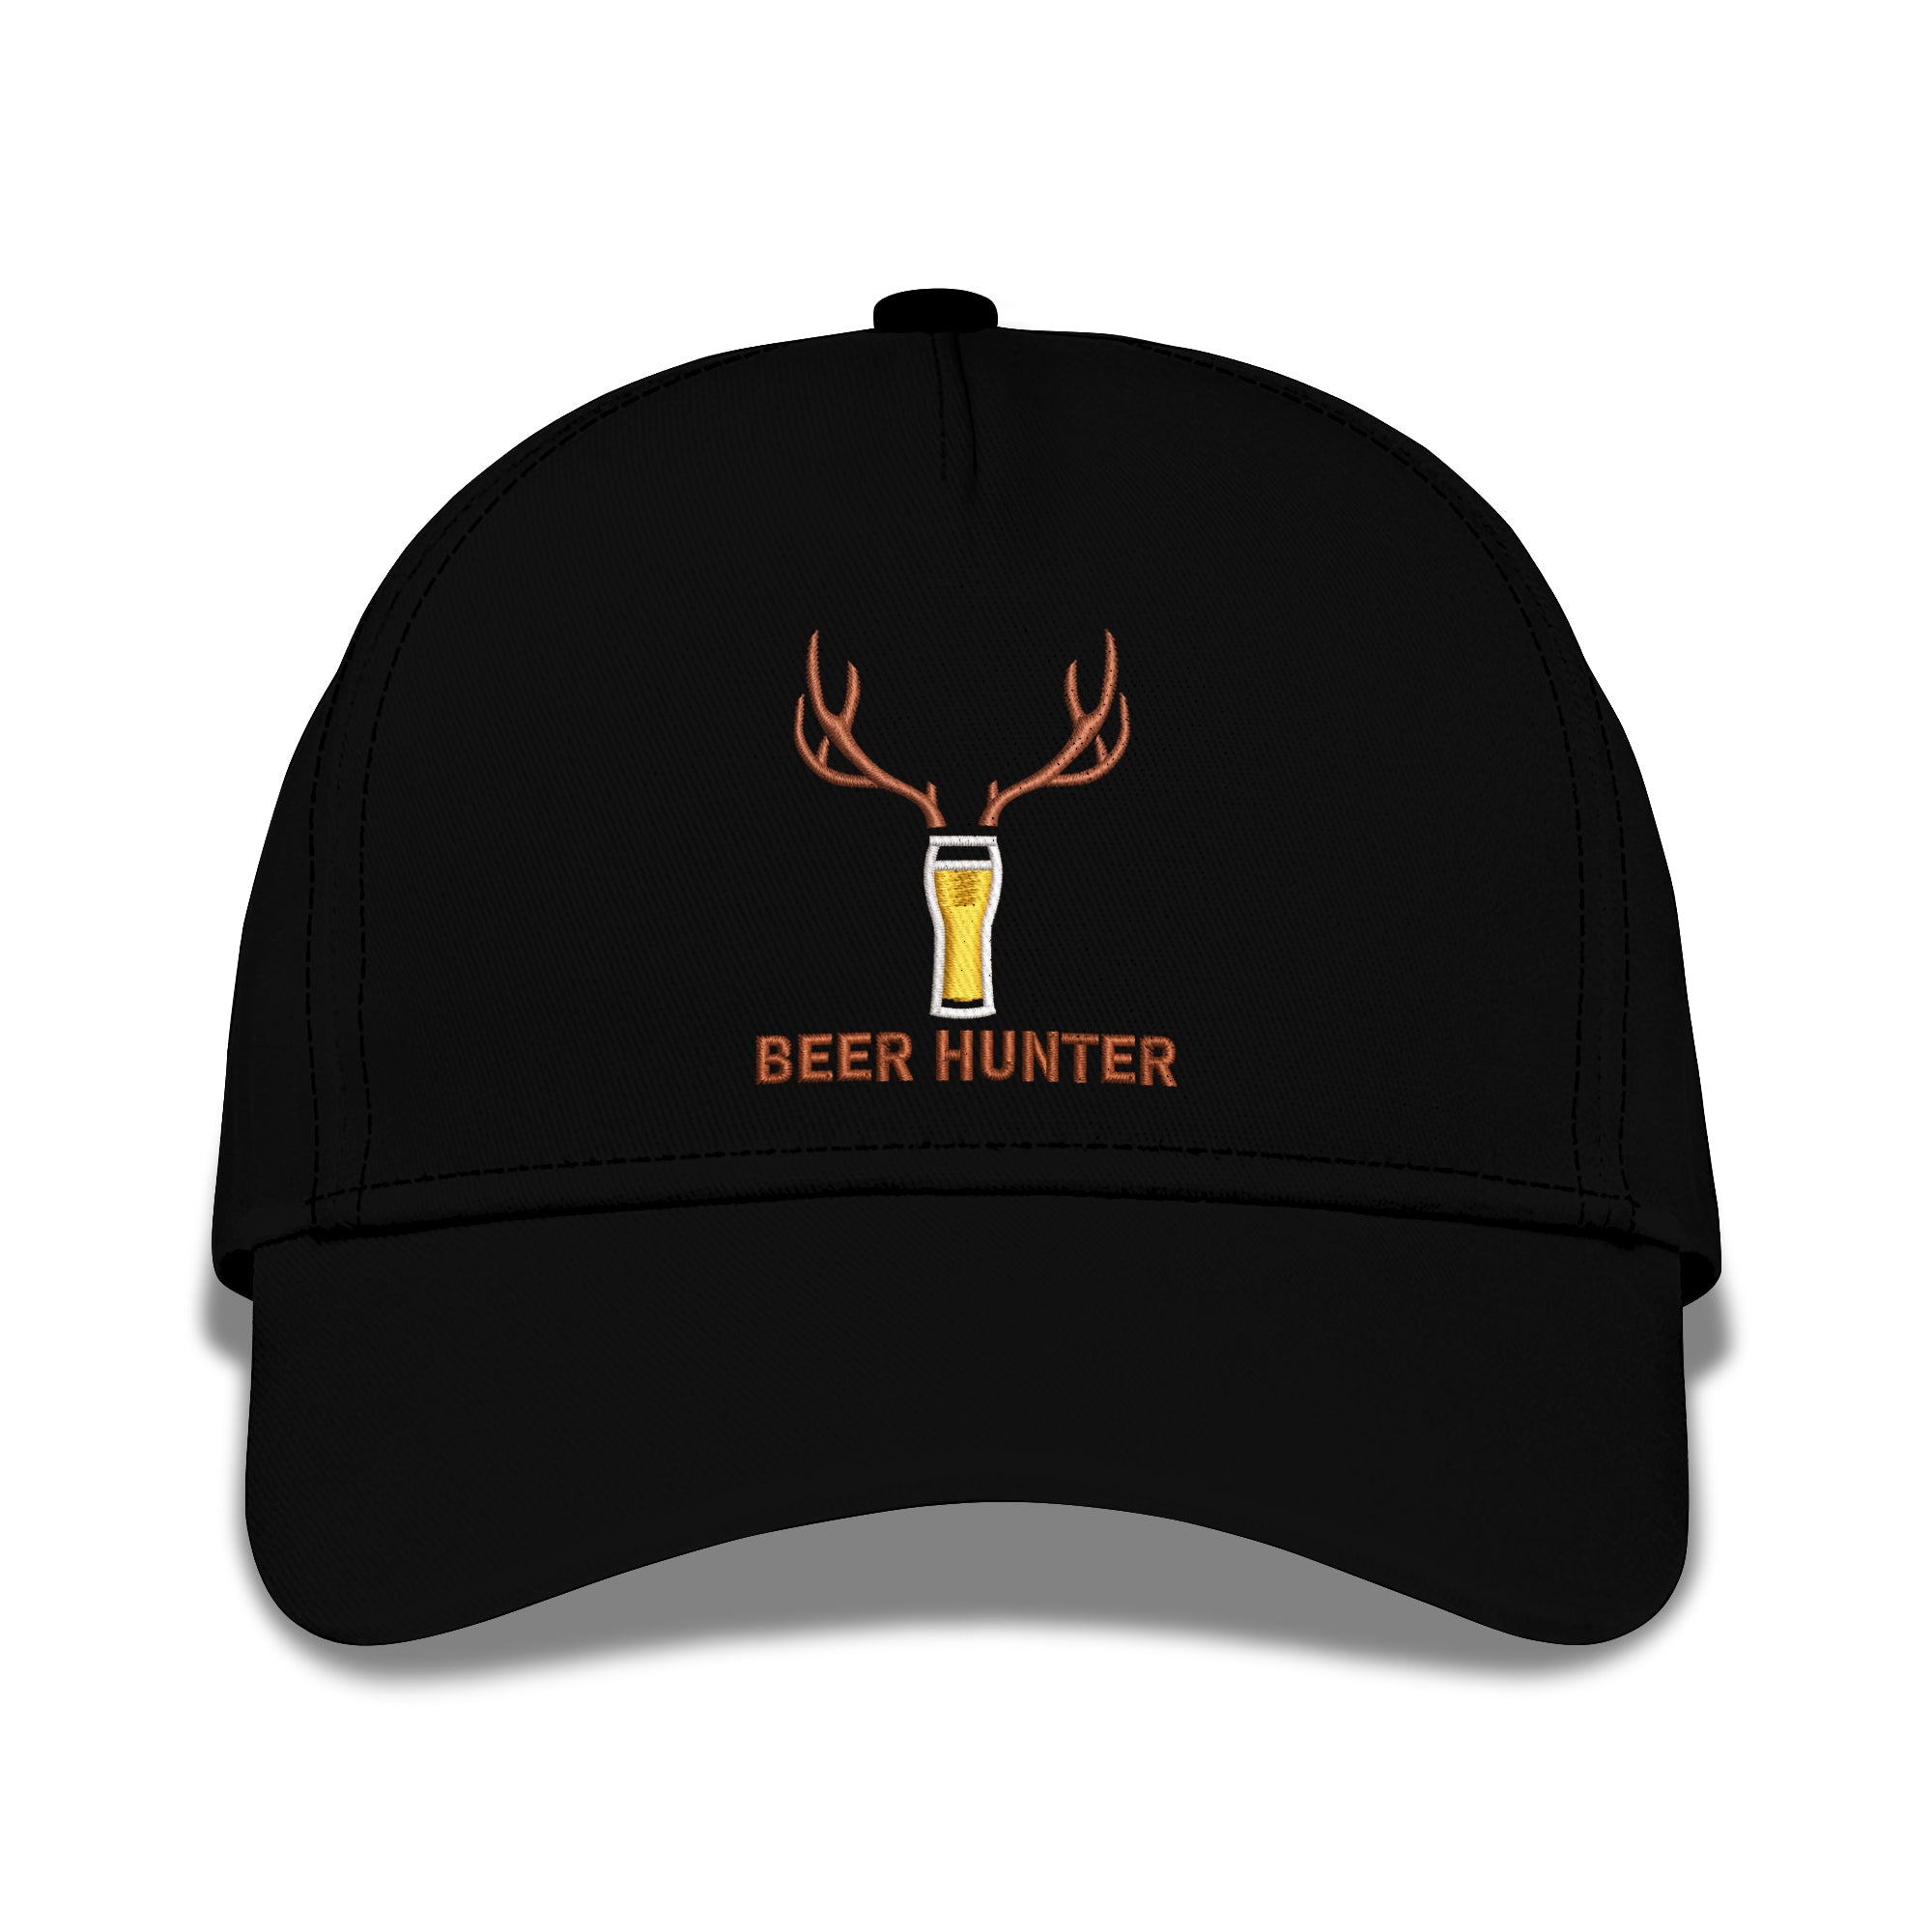 Beer Hunter Embroidered Baseball Caps, Deer Hunting Ballcap